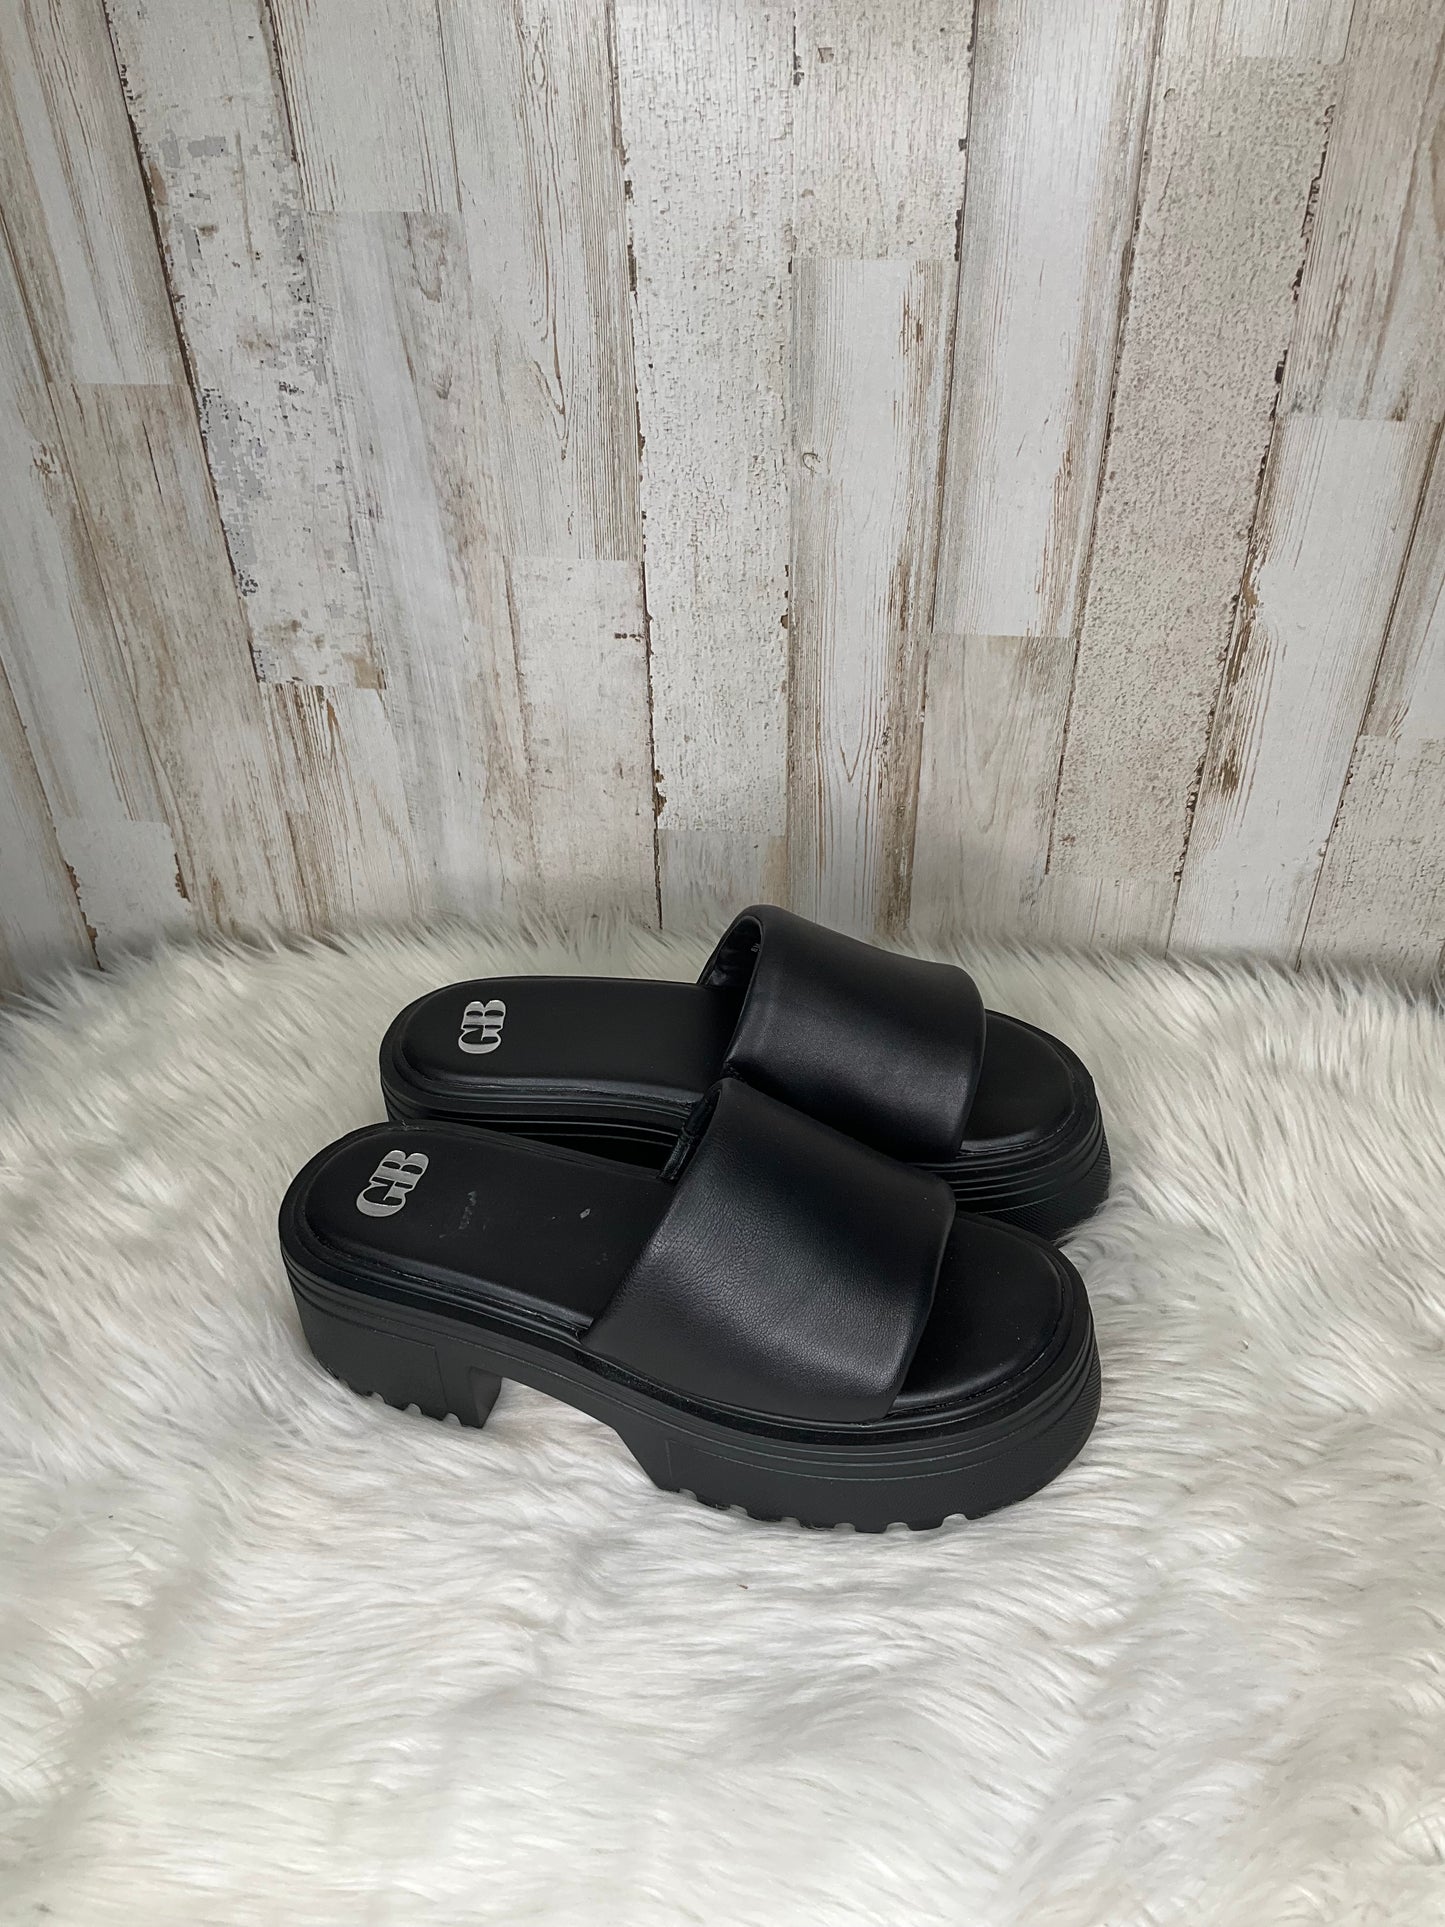 Sandals Heels Platform By Cmc  Size: 8